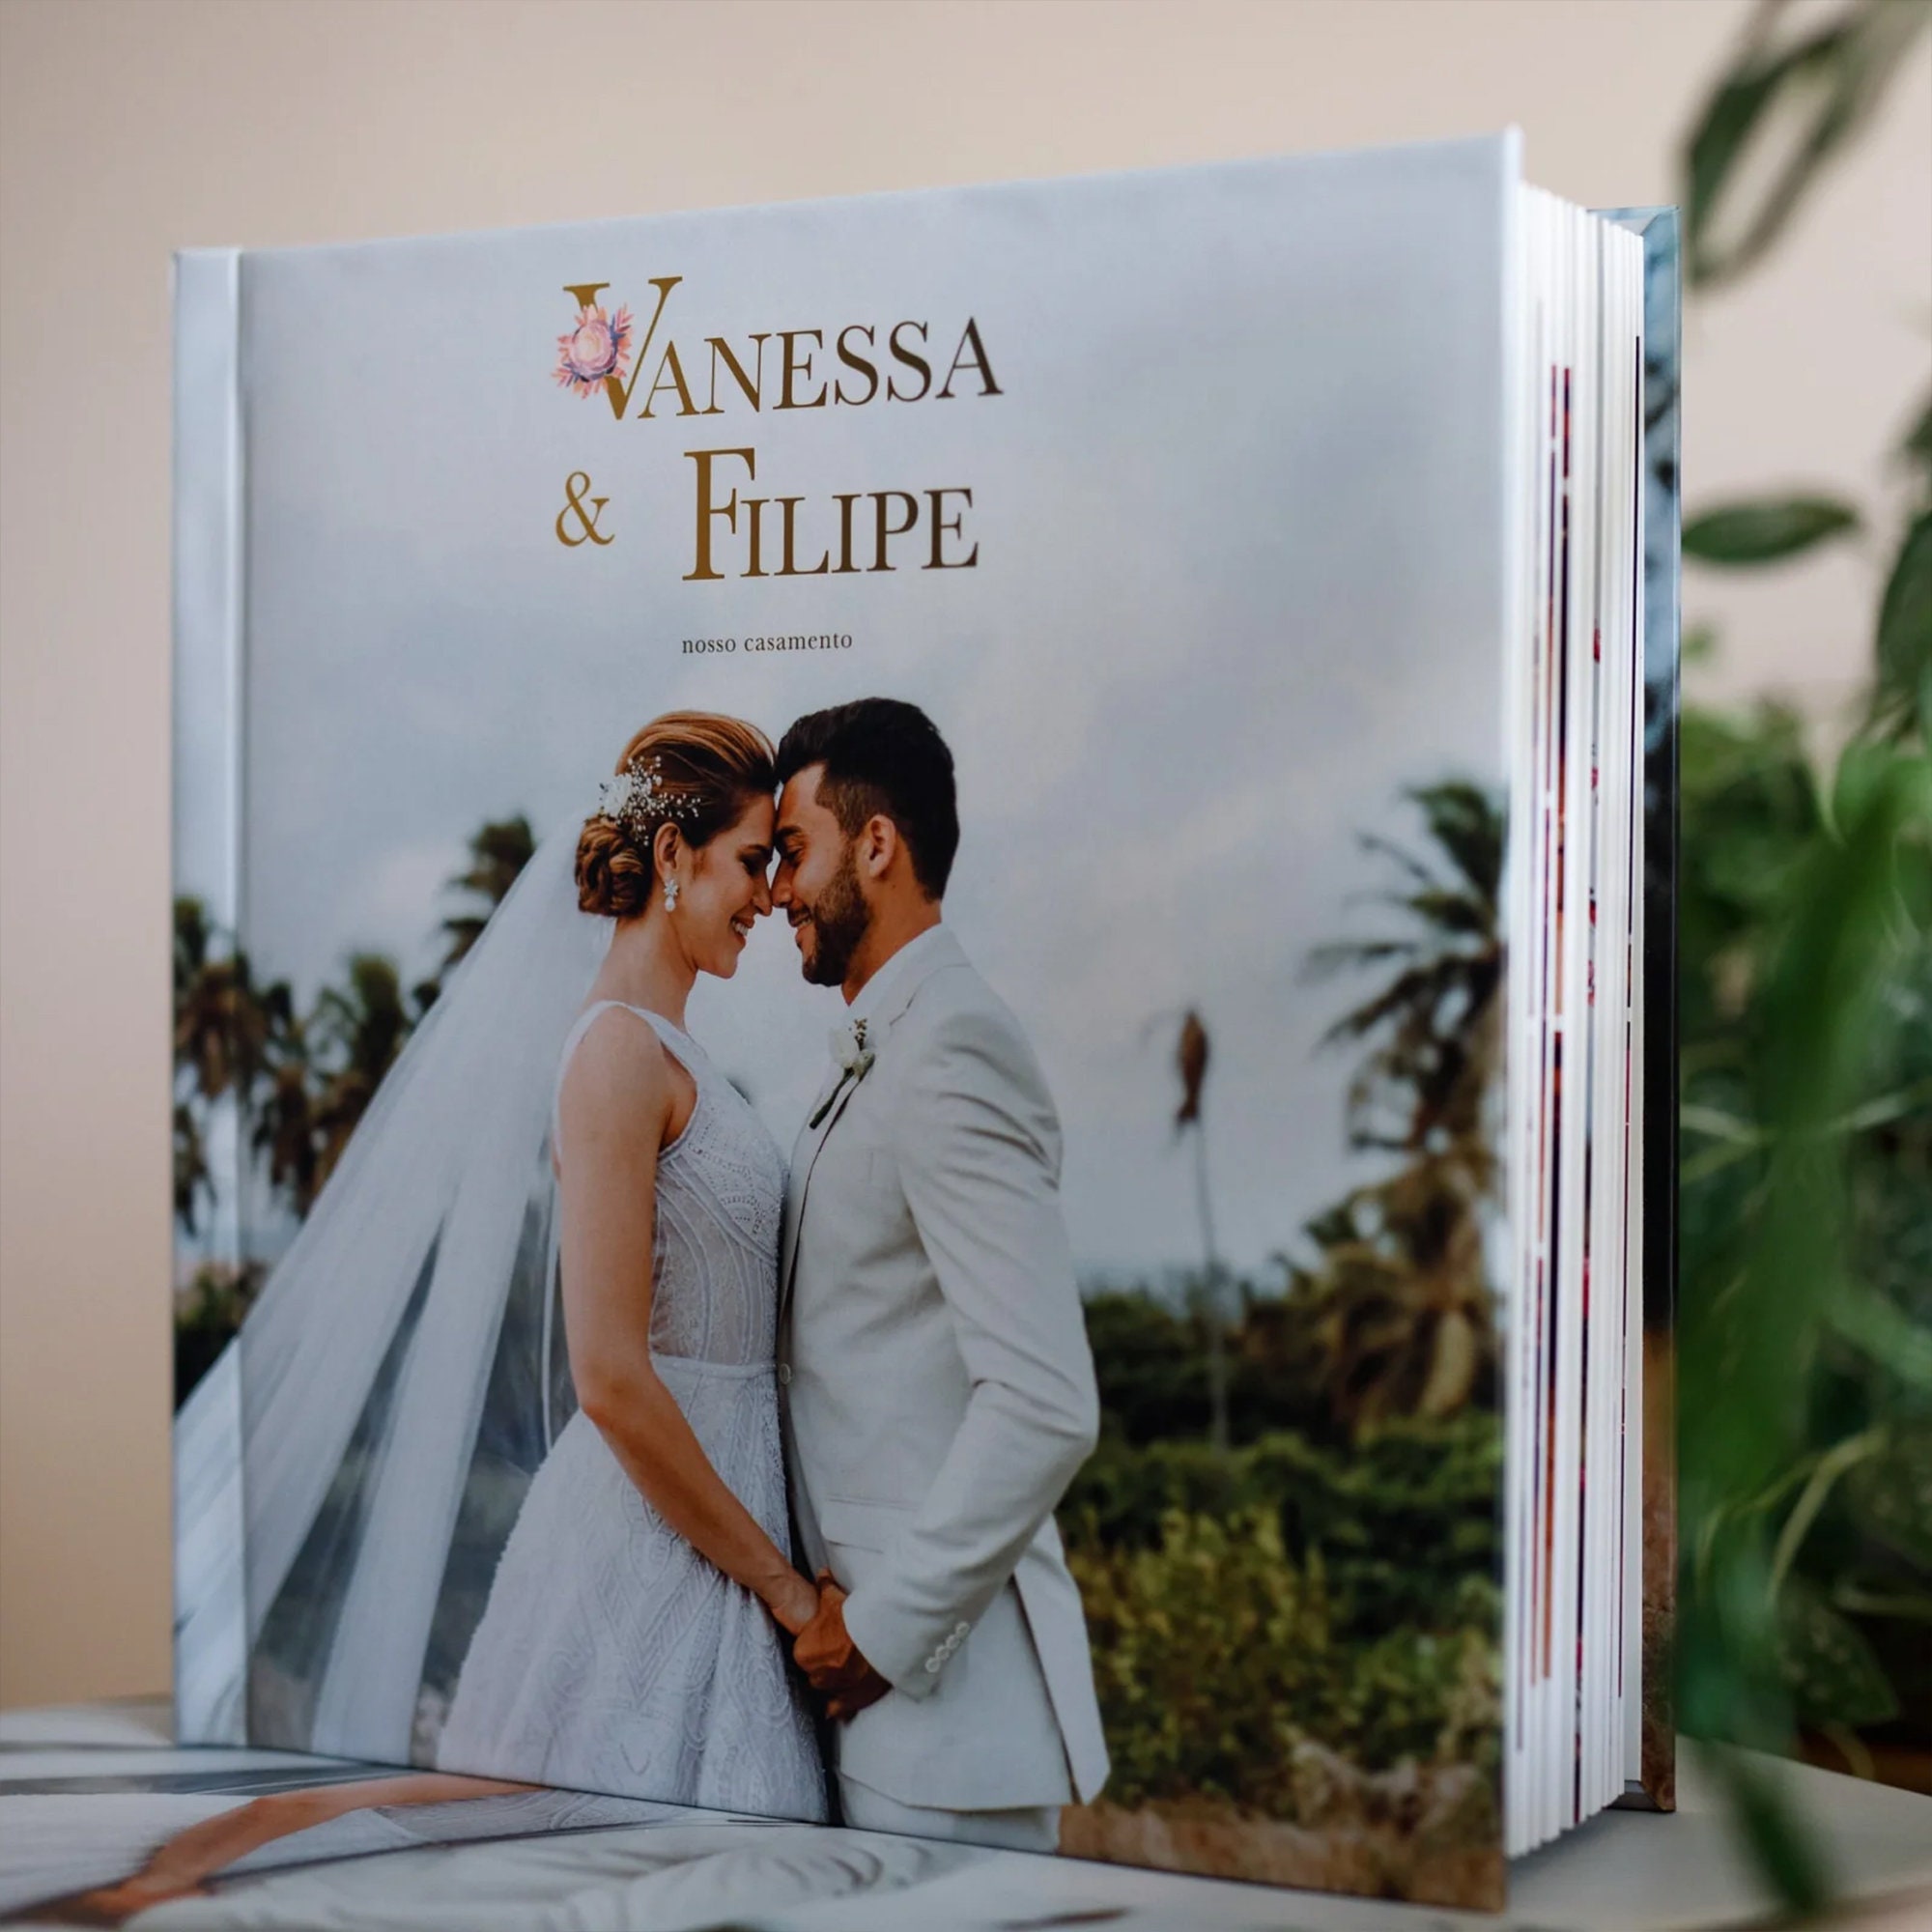 Suede Self-adhesive Wedding Anniversary Album, Family Photo Album, Travel  Photo Album, Large Scrapbook Album for 4x6, 5x7, 8x10 Size Photos 